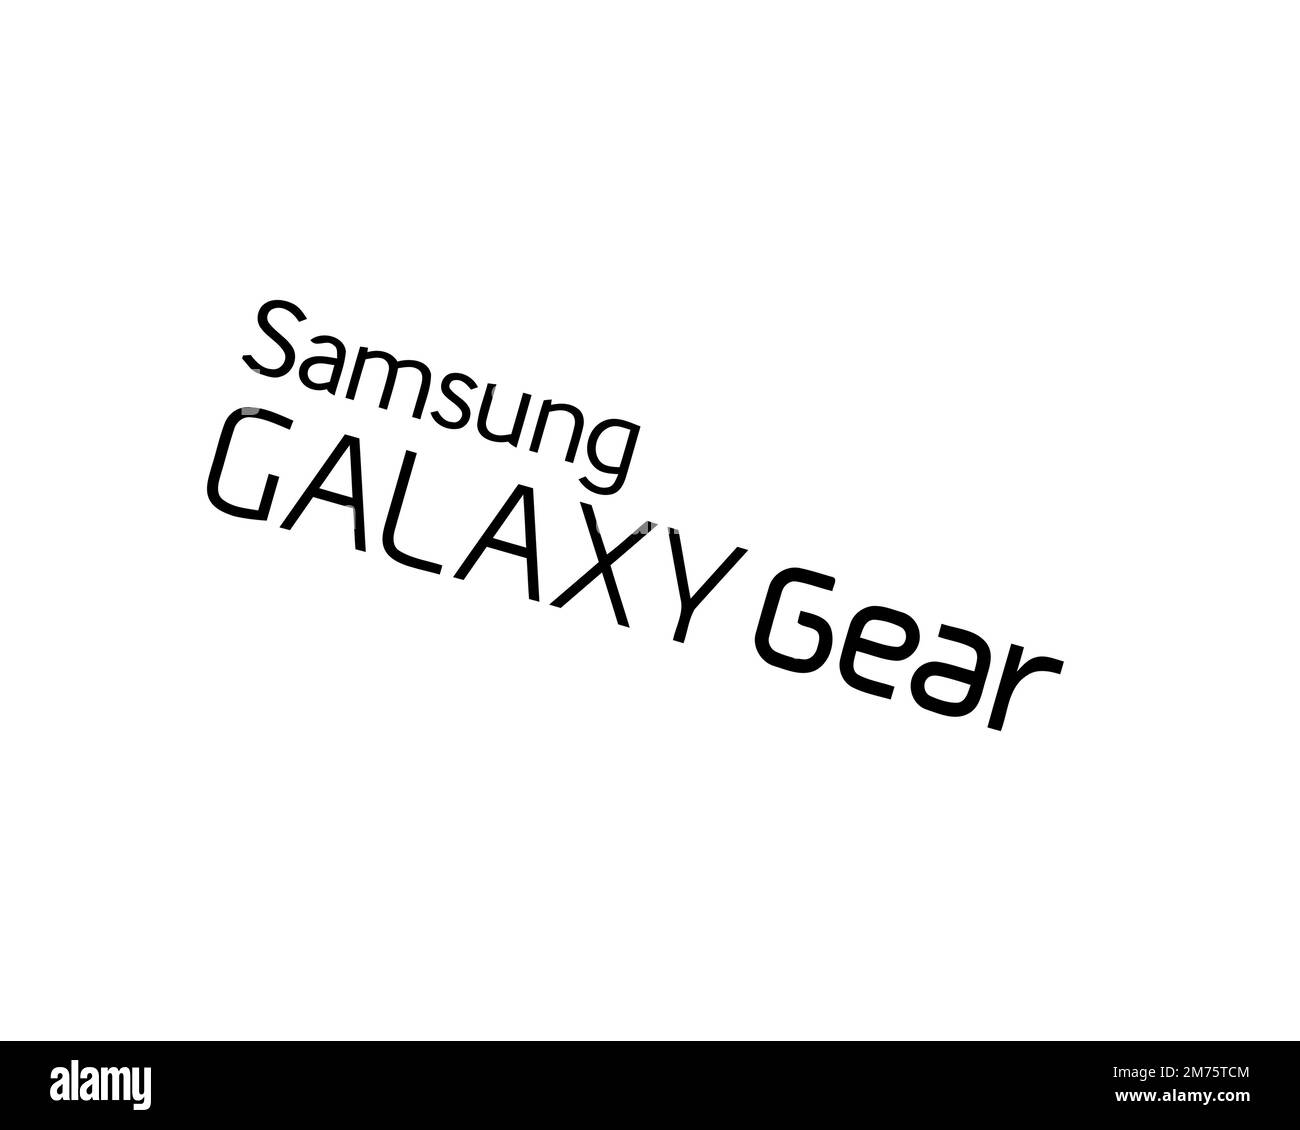 Samsung Galaxy Gear, Rotated Logo, White Background B Stock Photo